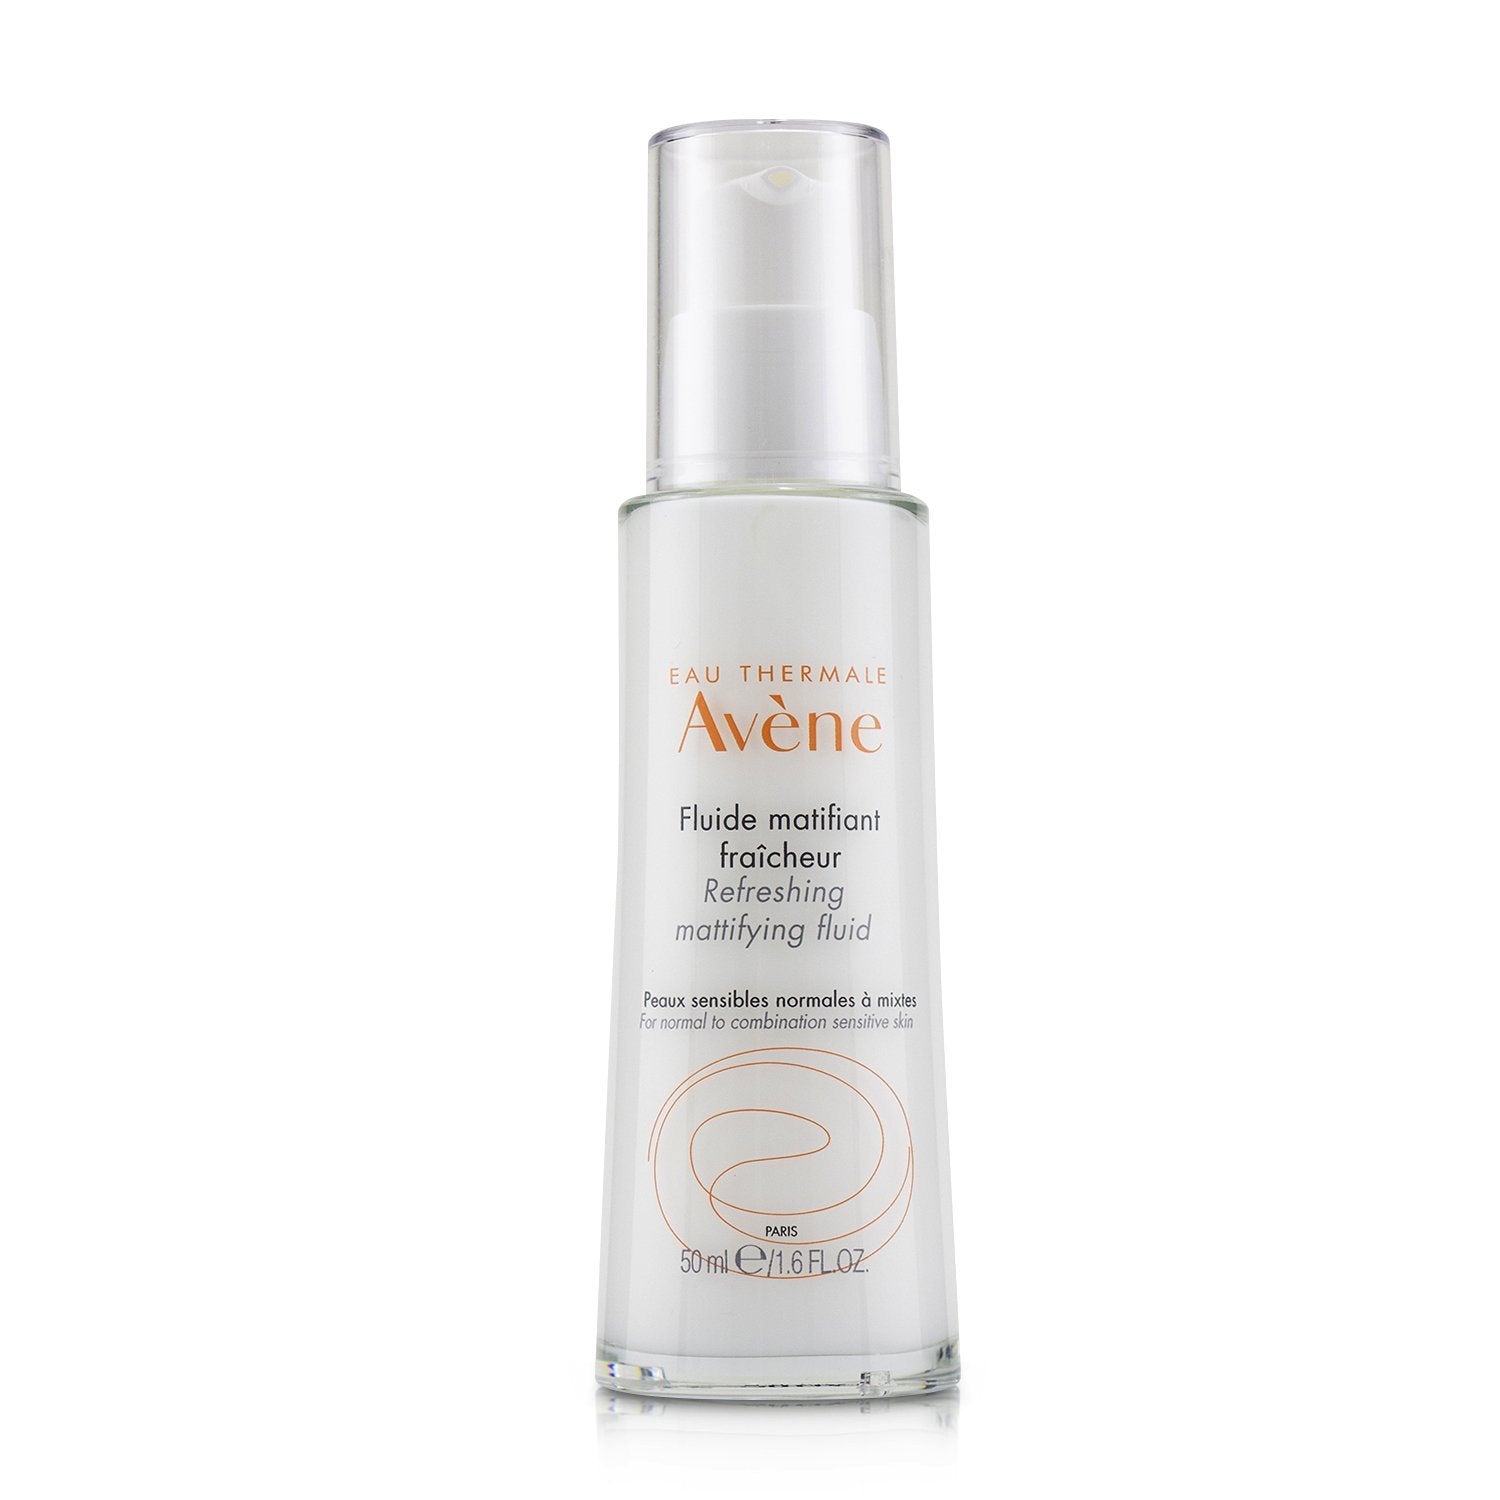 Bottle of AVENE - Refreshing Mattifying Fluid - For Normal to Combination Sensitive Skin 20938 50ml/1.6oz on a white background.